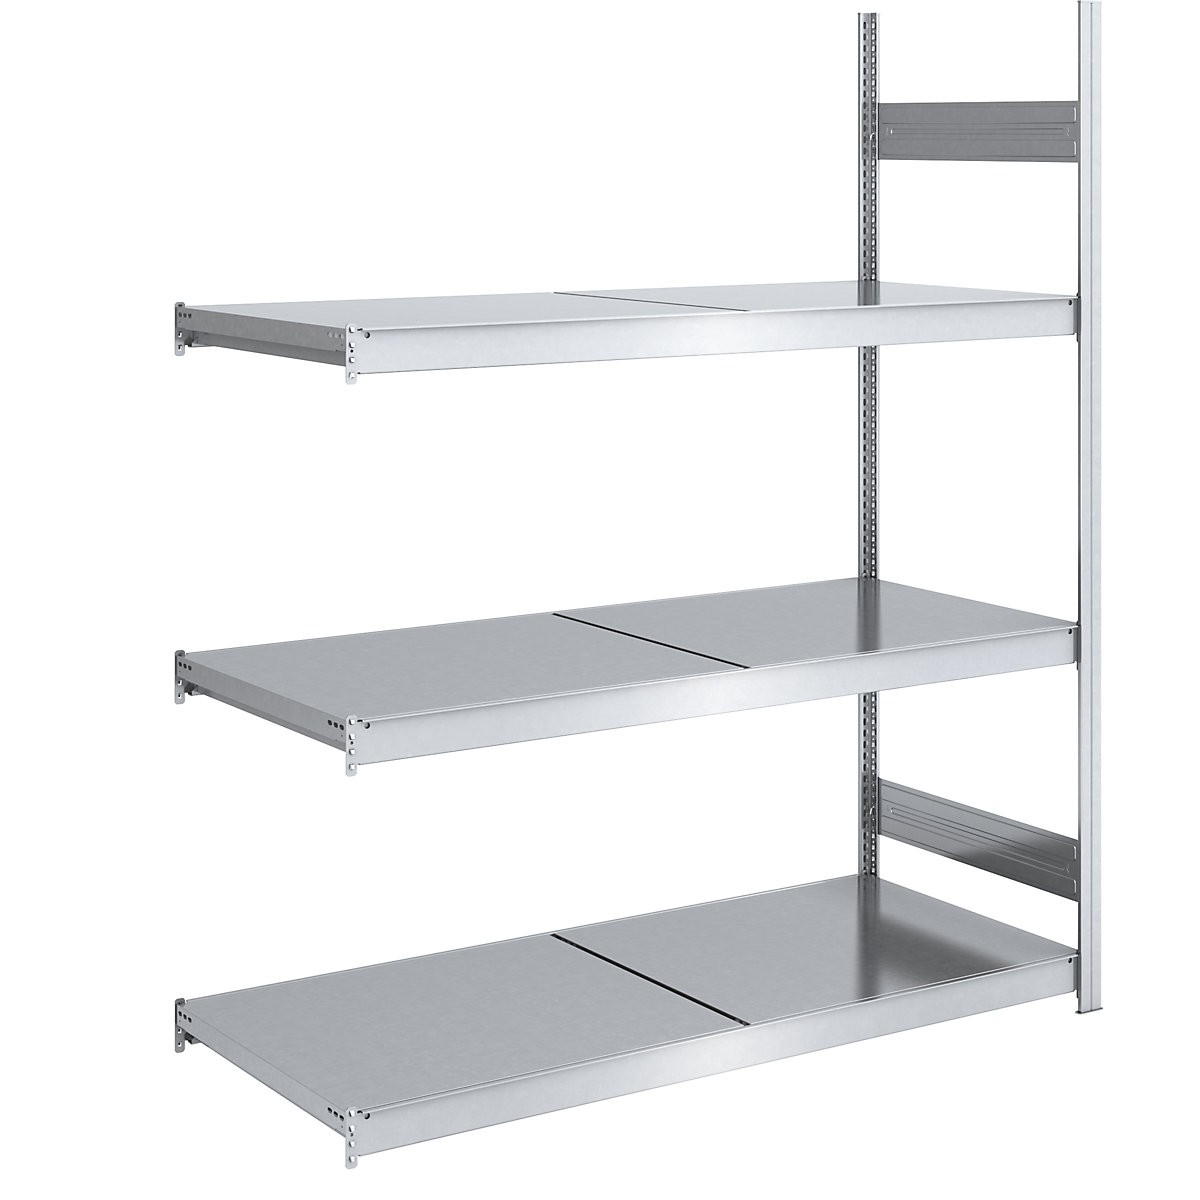 Wide span boltless shelving unit with steel shelves – hofe, height 2000 mm, shelf width 1500 mm, shelf depth 800 mm, extension shelf unit